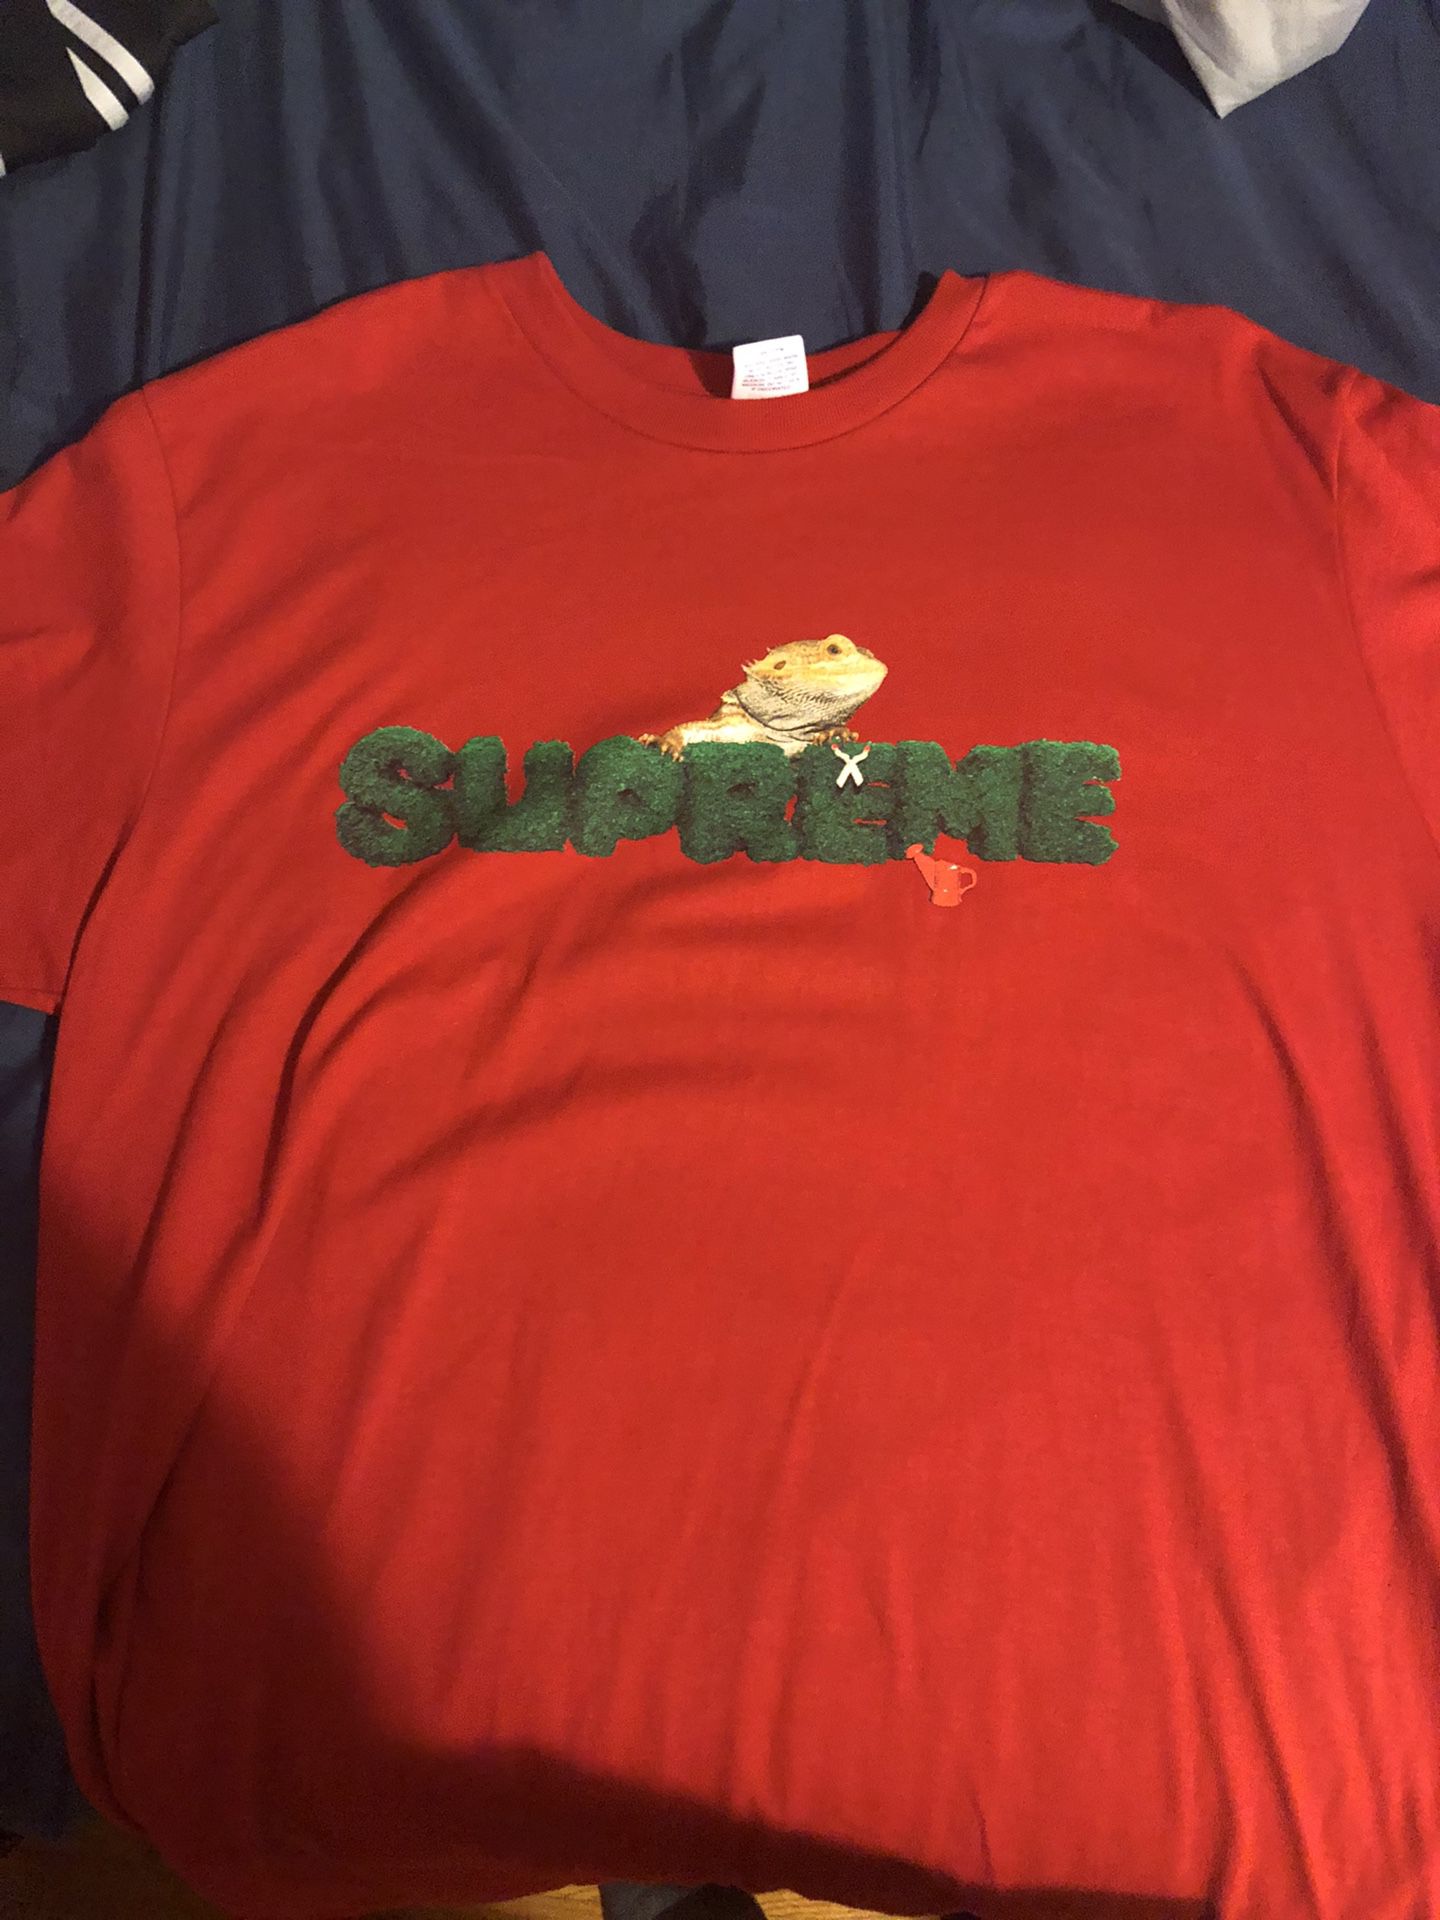 Supreme shirt size: Large